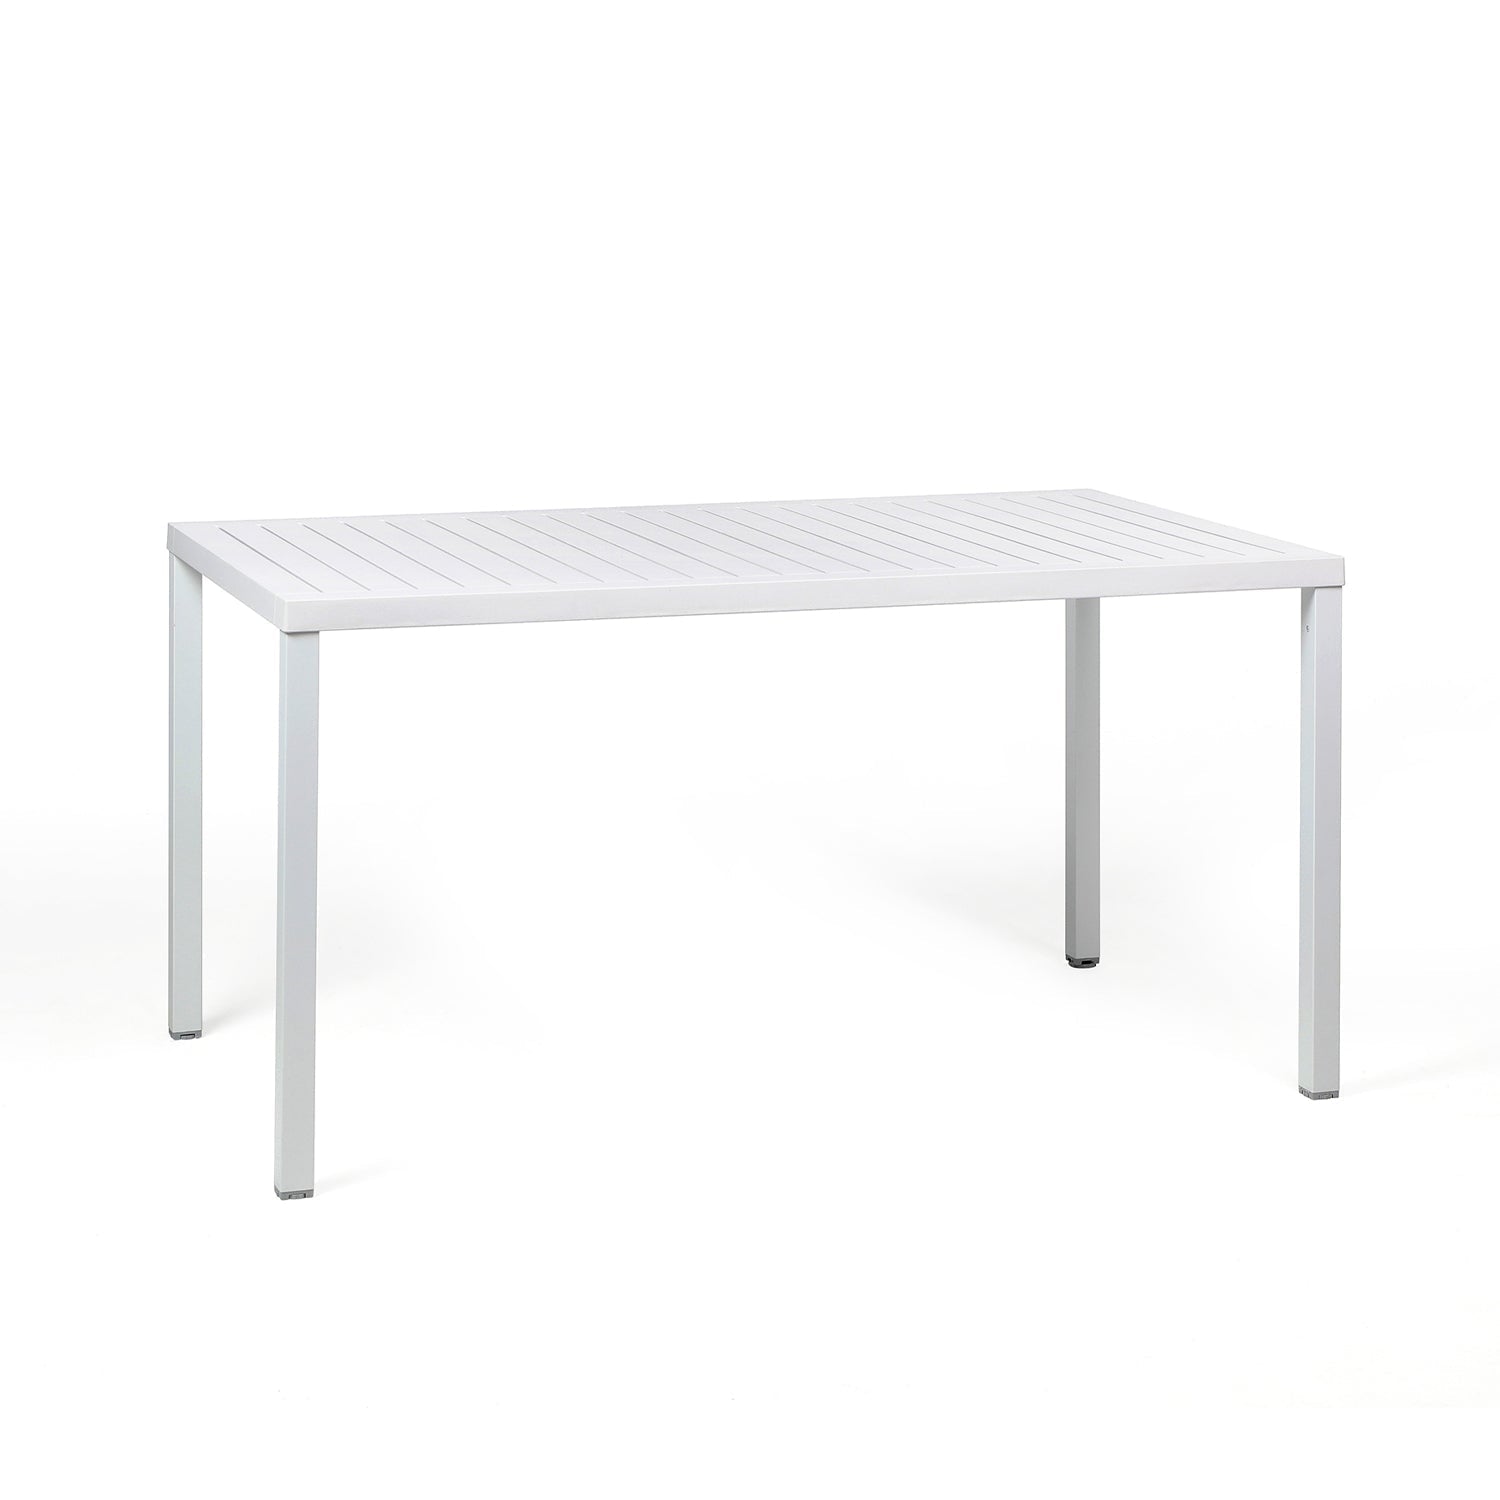 Cube 140 Garden Table In White